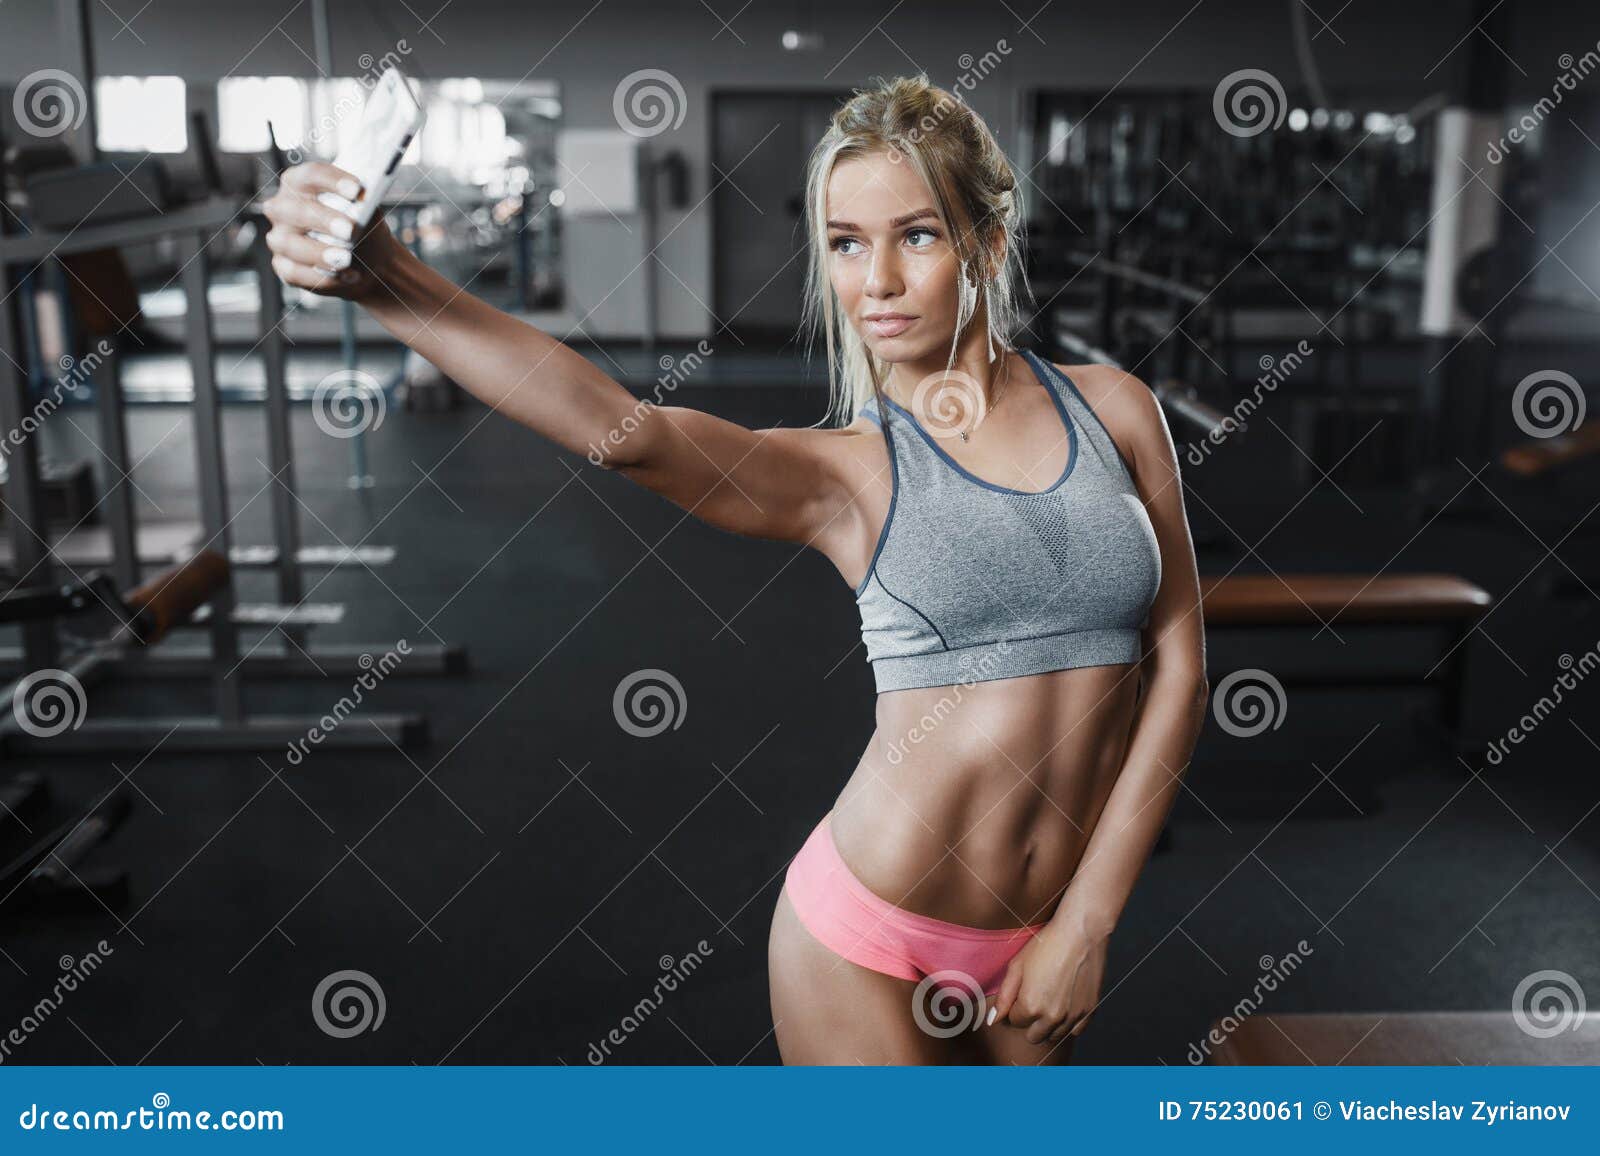 sexy blonde fitness selfie